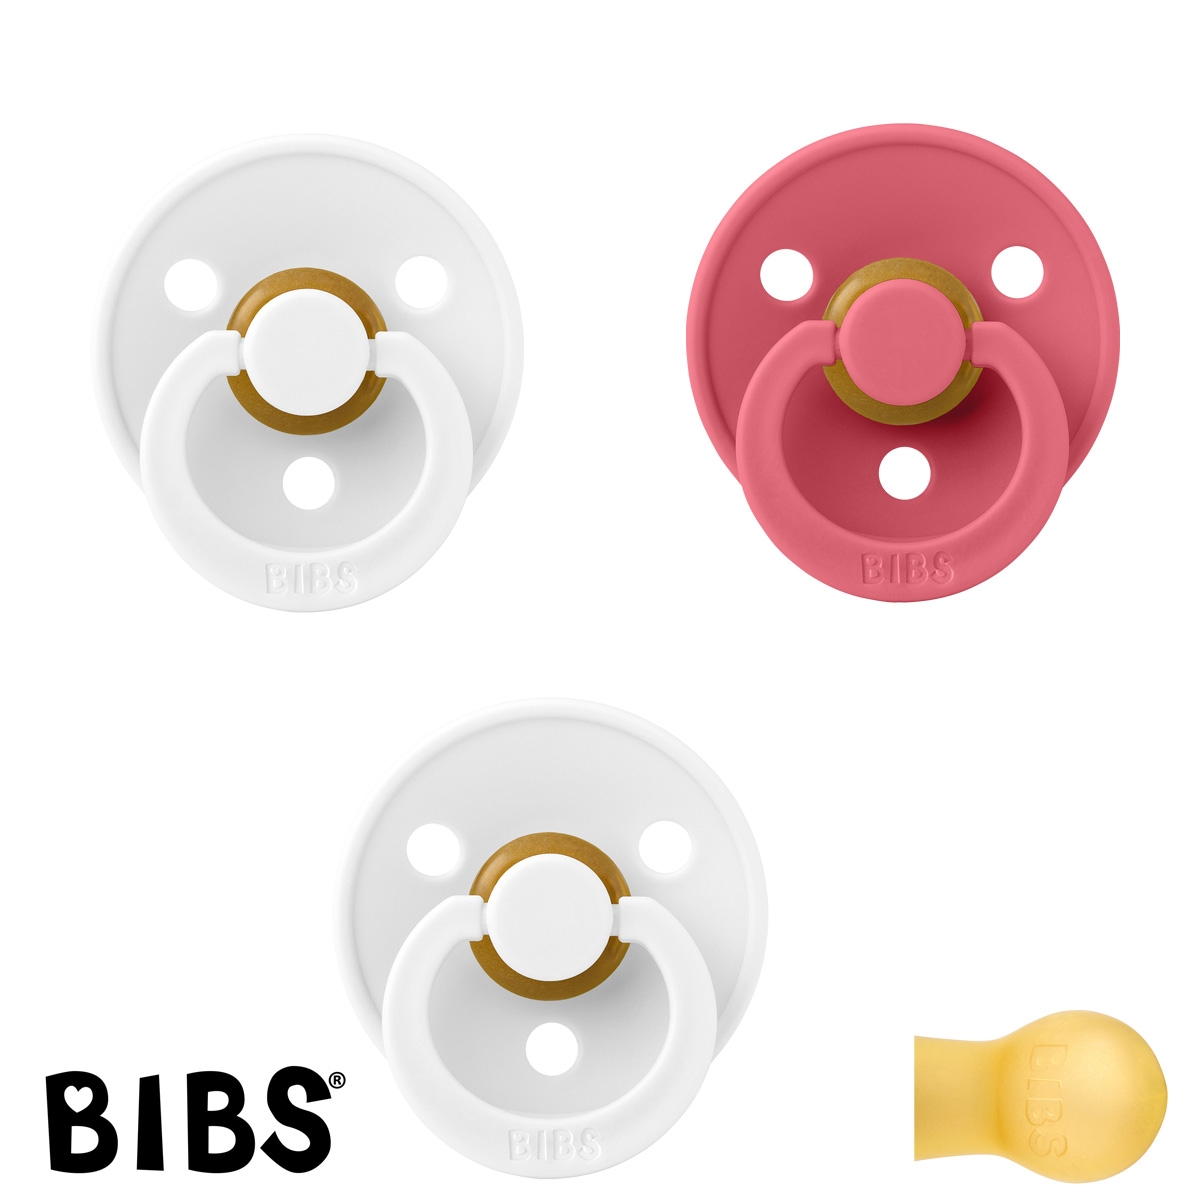 BIBS Colour Sutter med navn str2, 2 White, 1 Coral, Runde latex, Pakke med 3 sutter